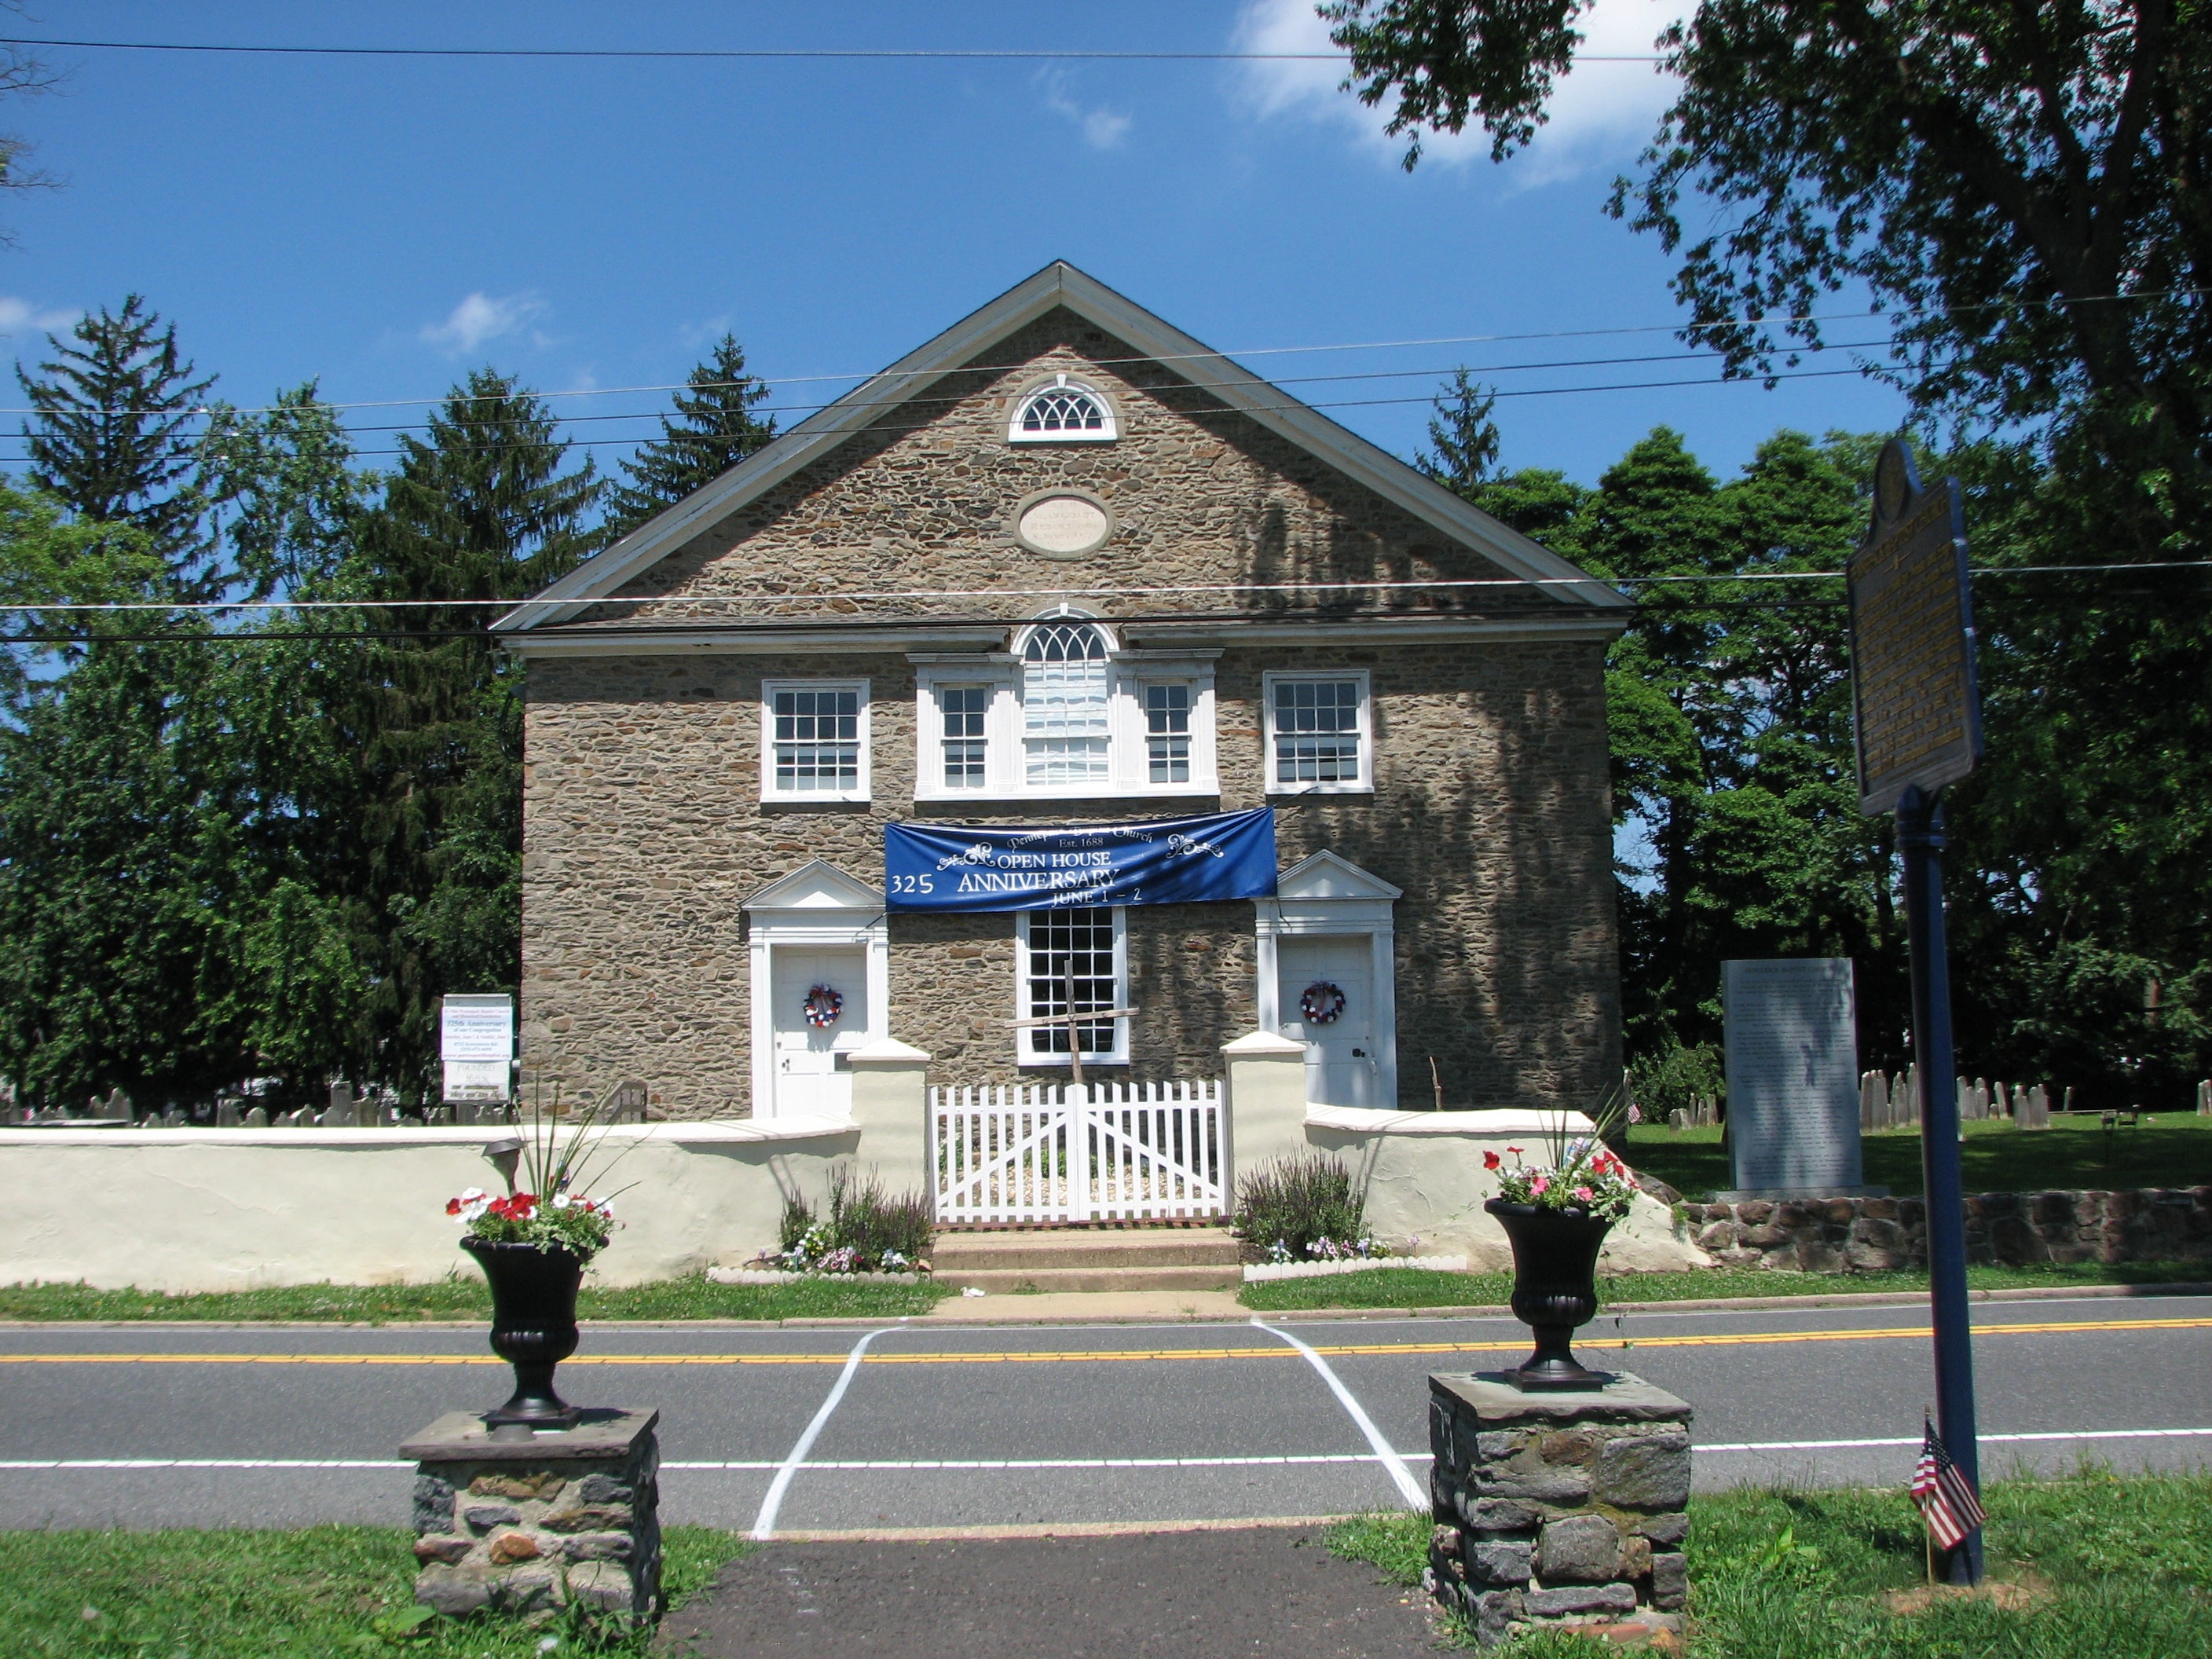 Pennepack Baptist Church is an 18th-century survivor amidst mid-20th century housing developments.